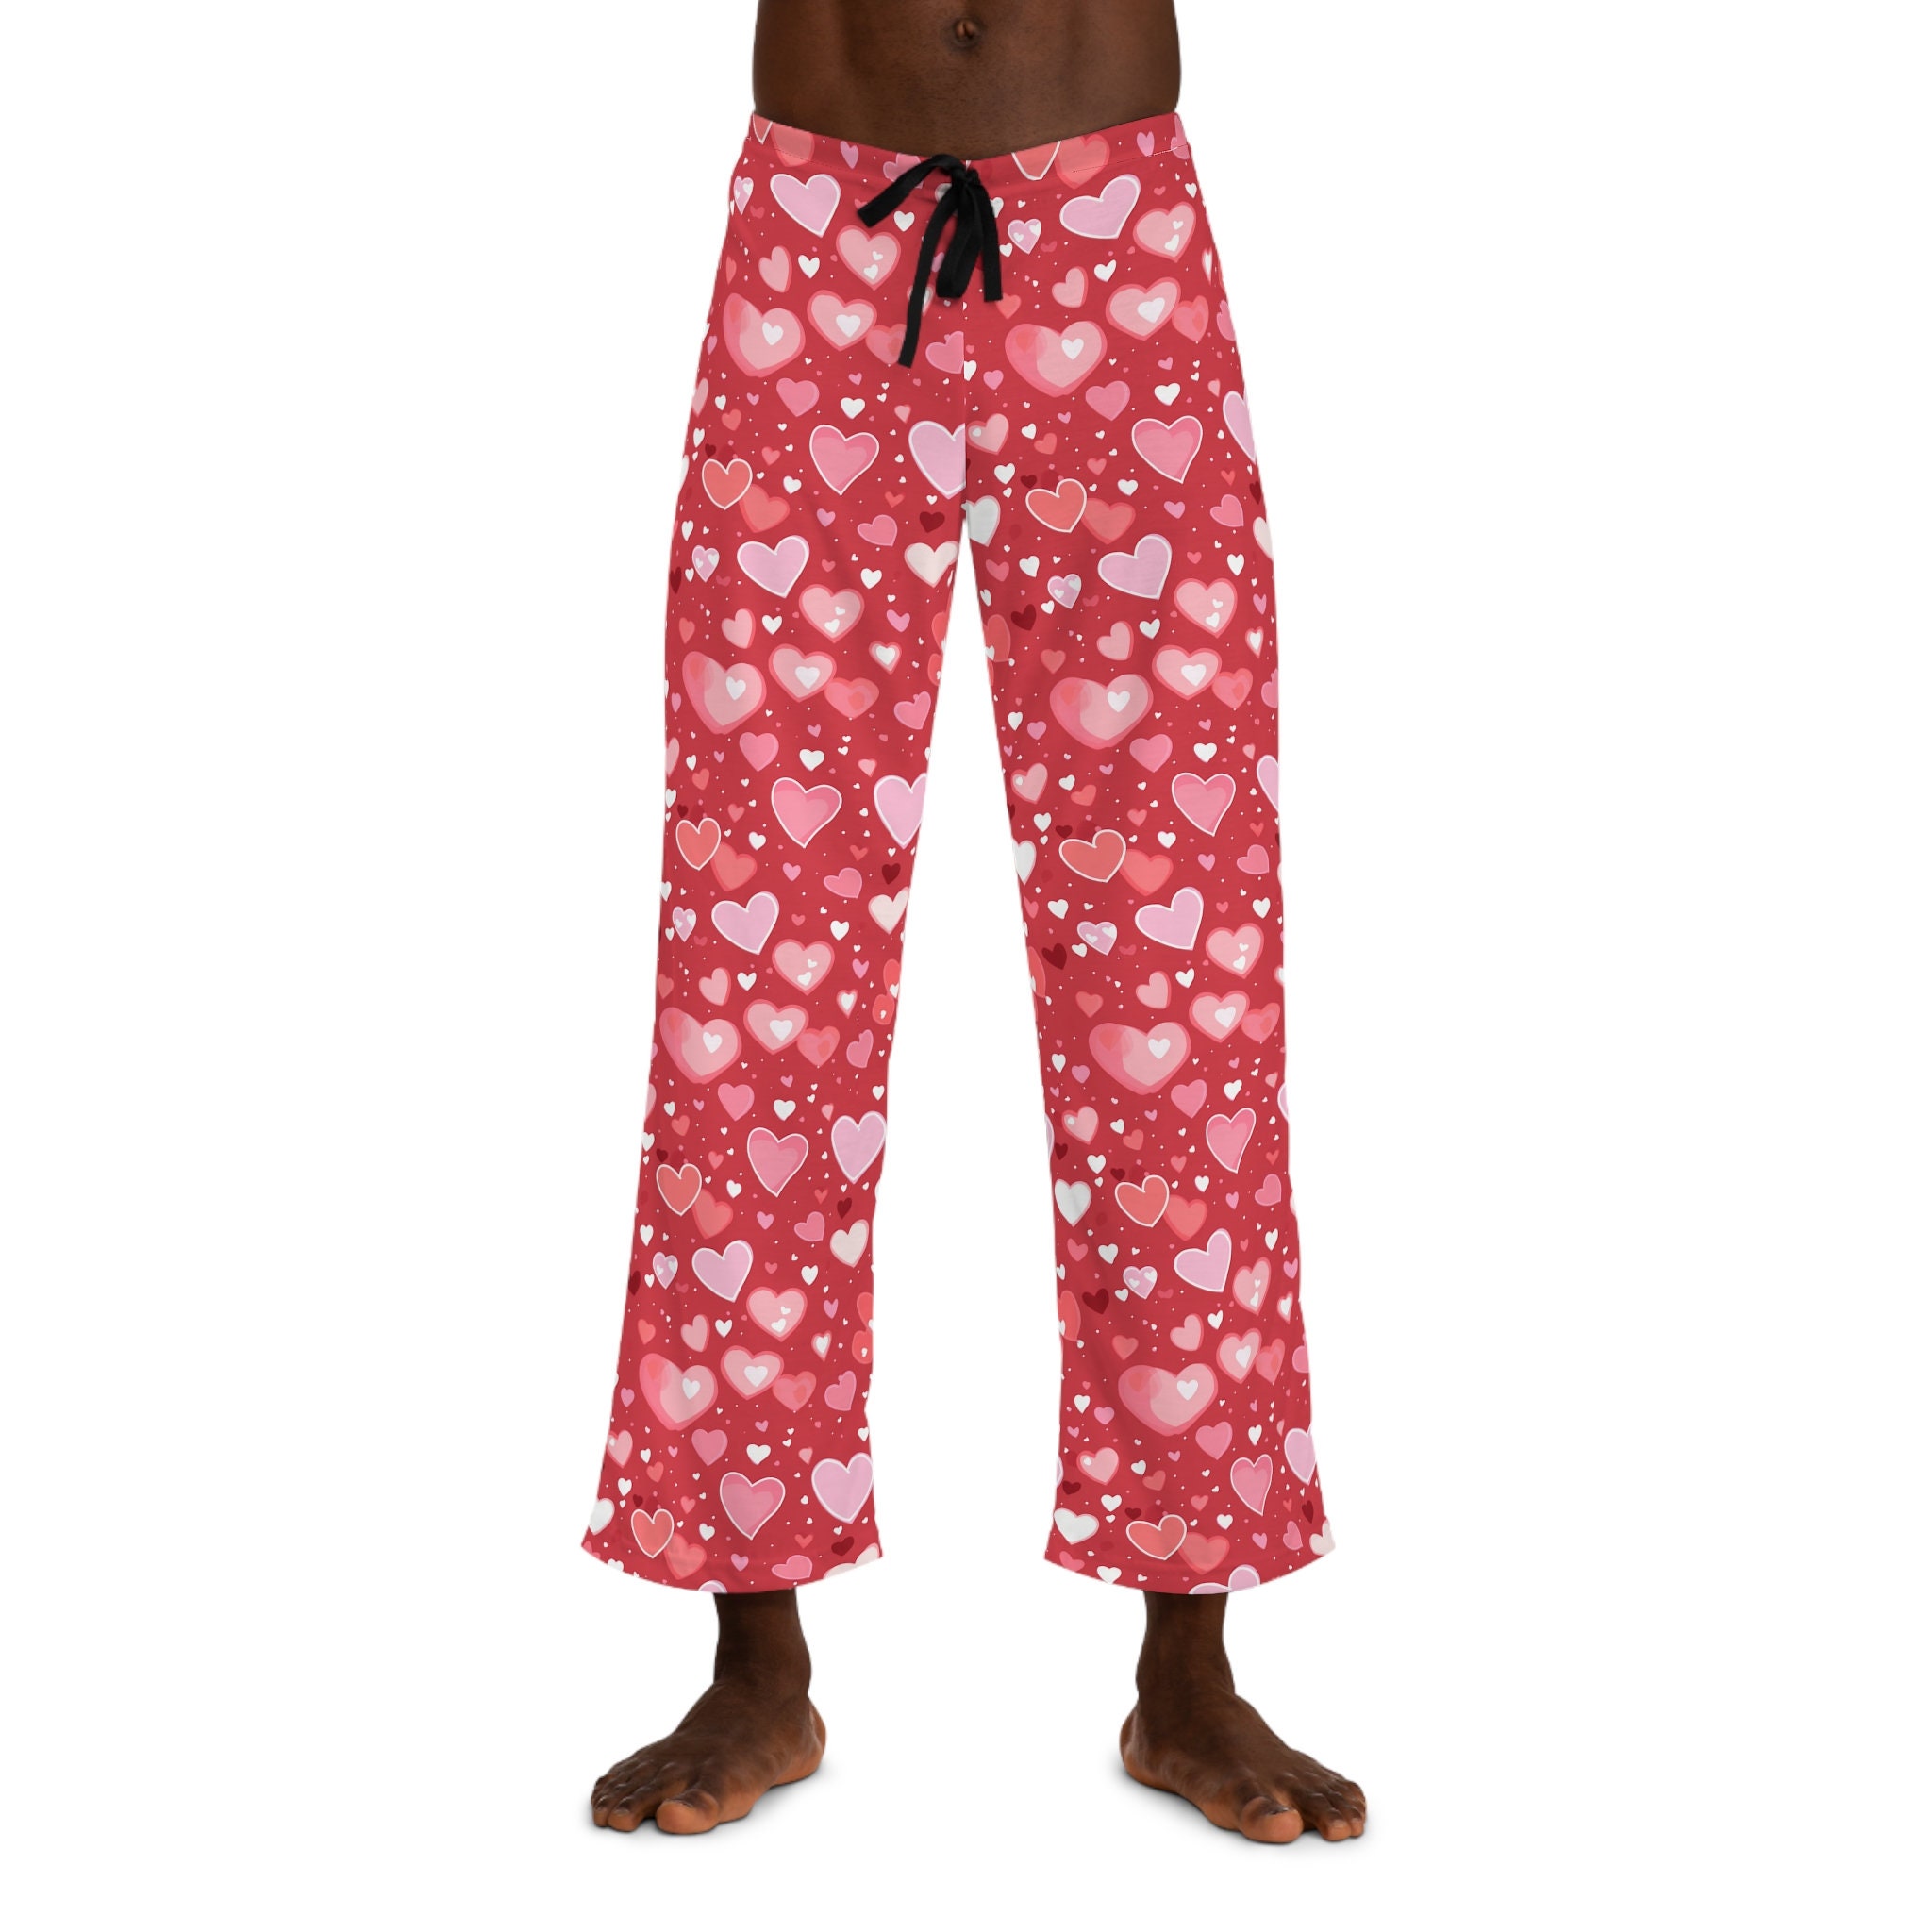 Pink With Black Heart Valentine Print Pajama Pants Jersey Knit Women  Valentines Day Gift Sleep or Lounge Wear PJ Bottoms Pink Print PJ Pants 